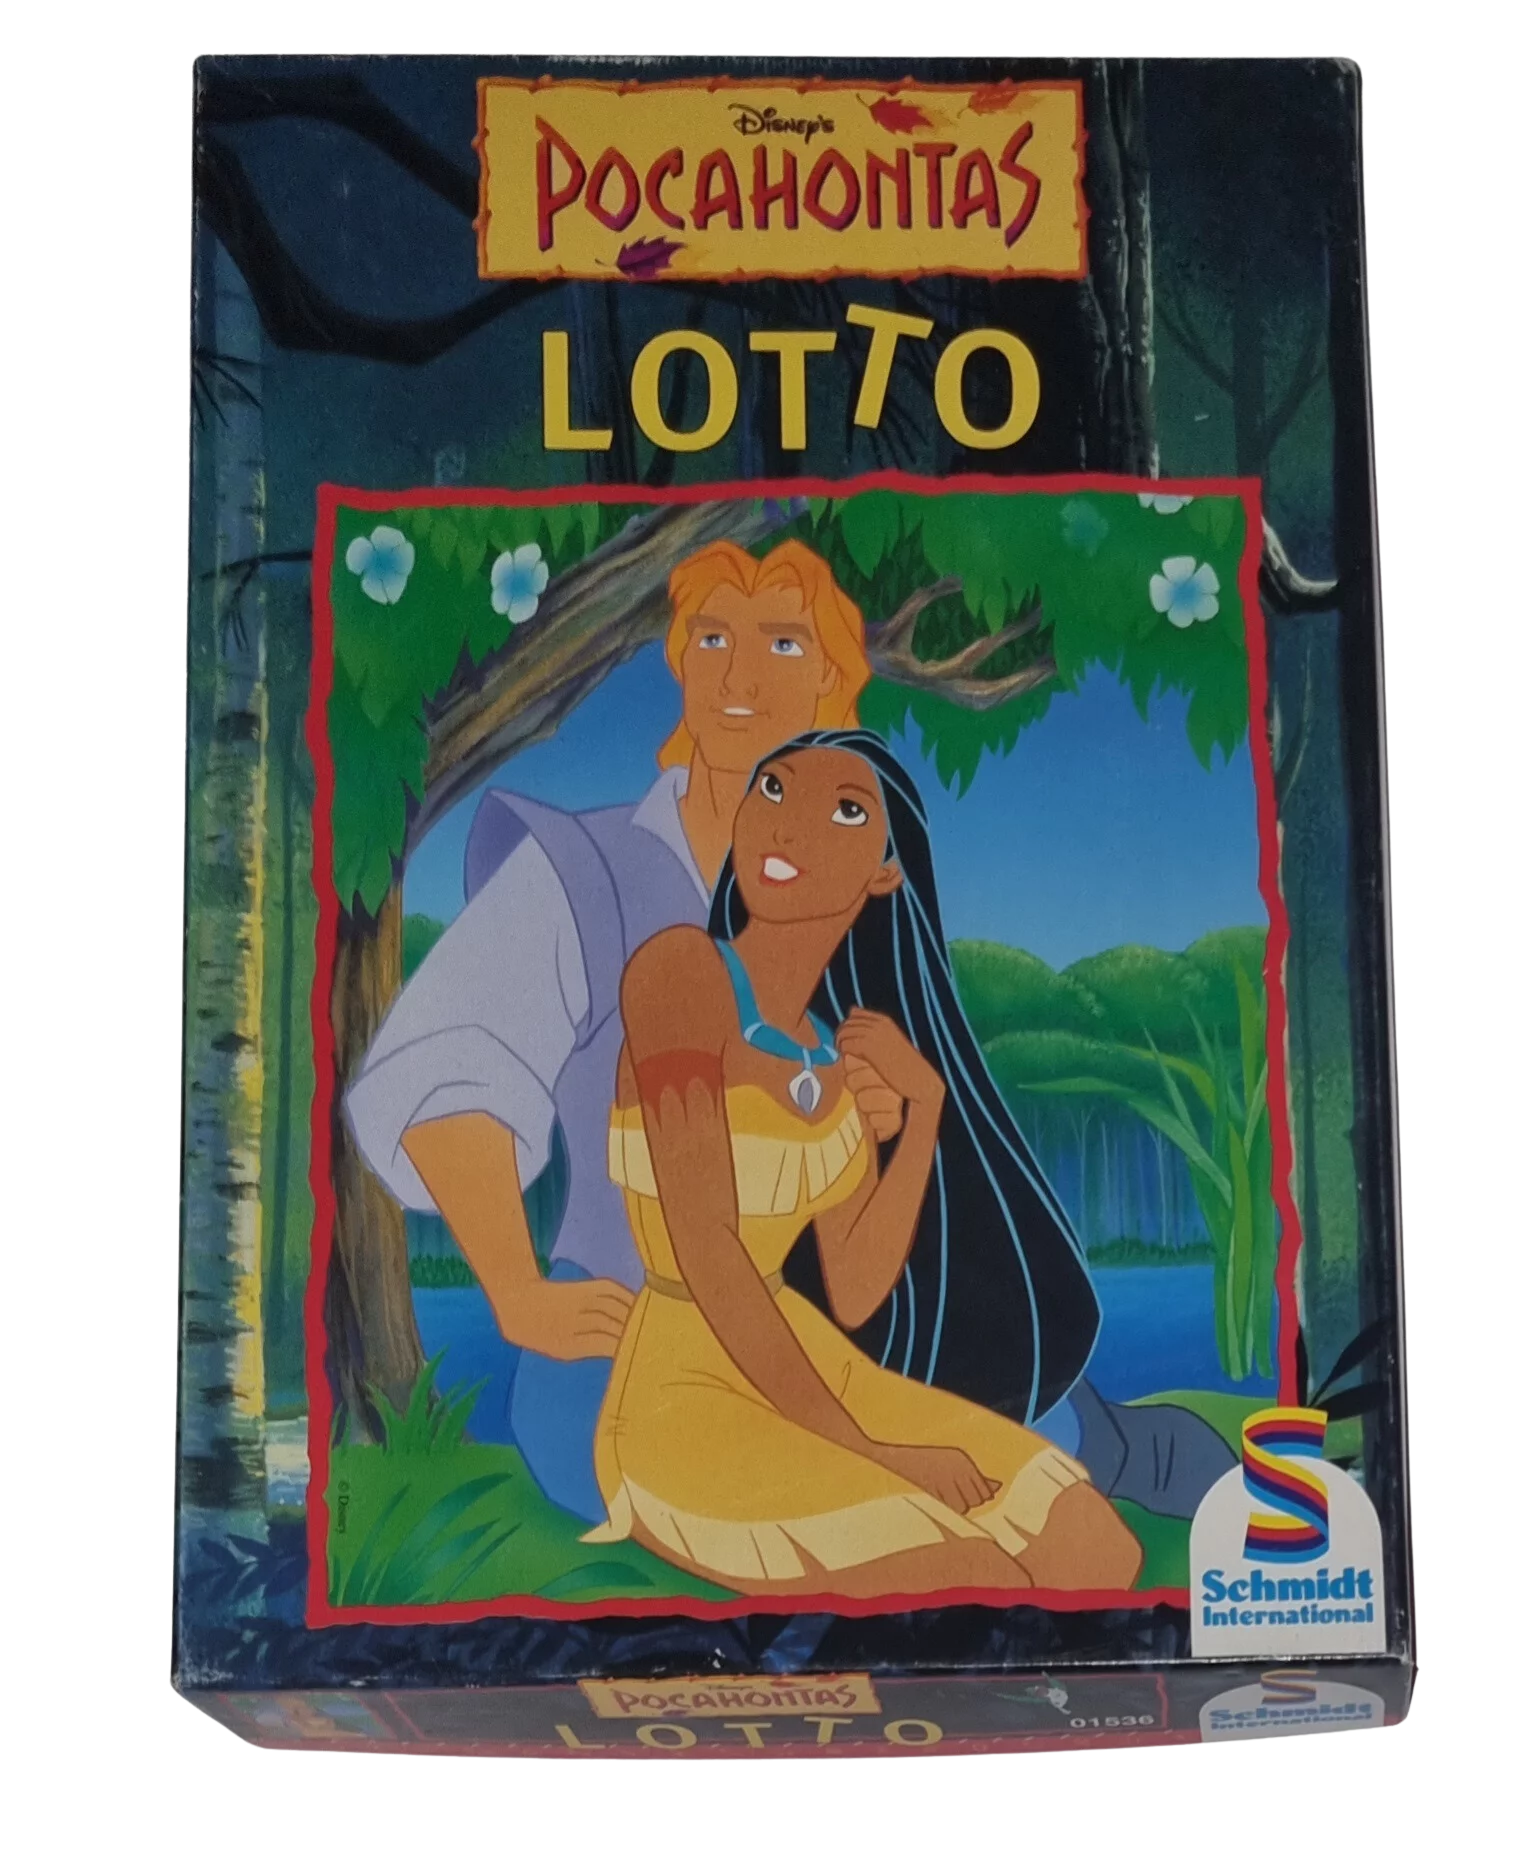 Schmidt Disney Pocahontas Lotto 01536